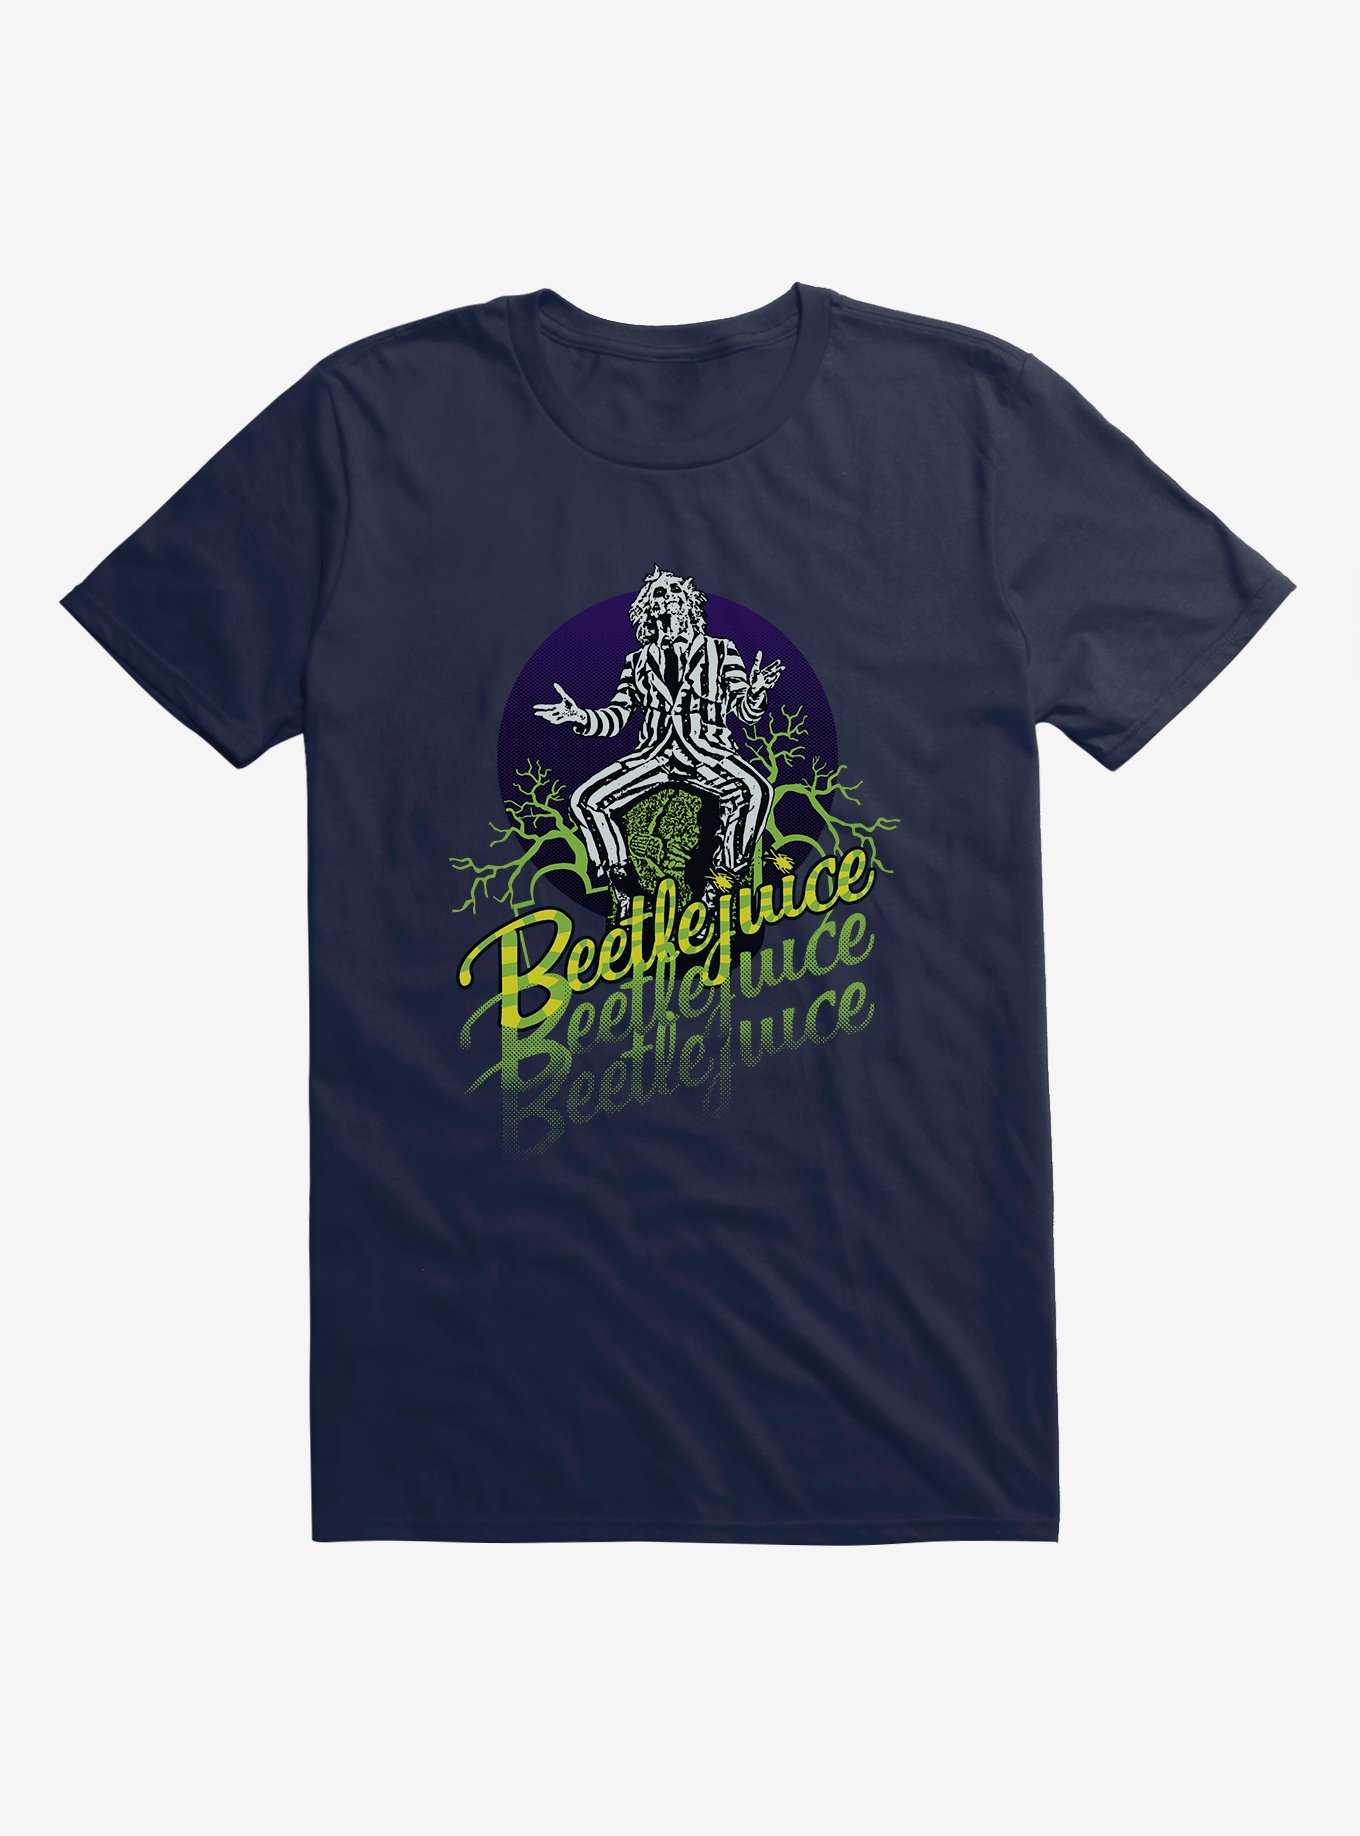 Beetlejuice Branches T-Shirt, , hi-res